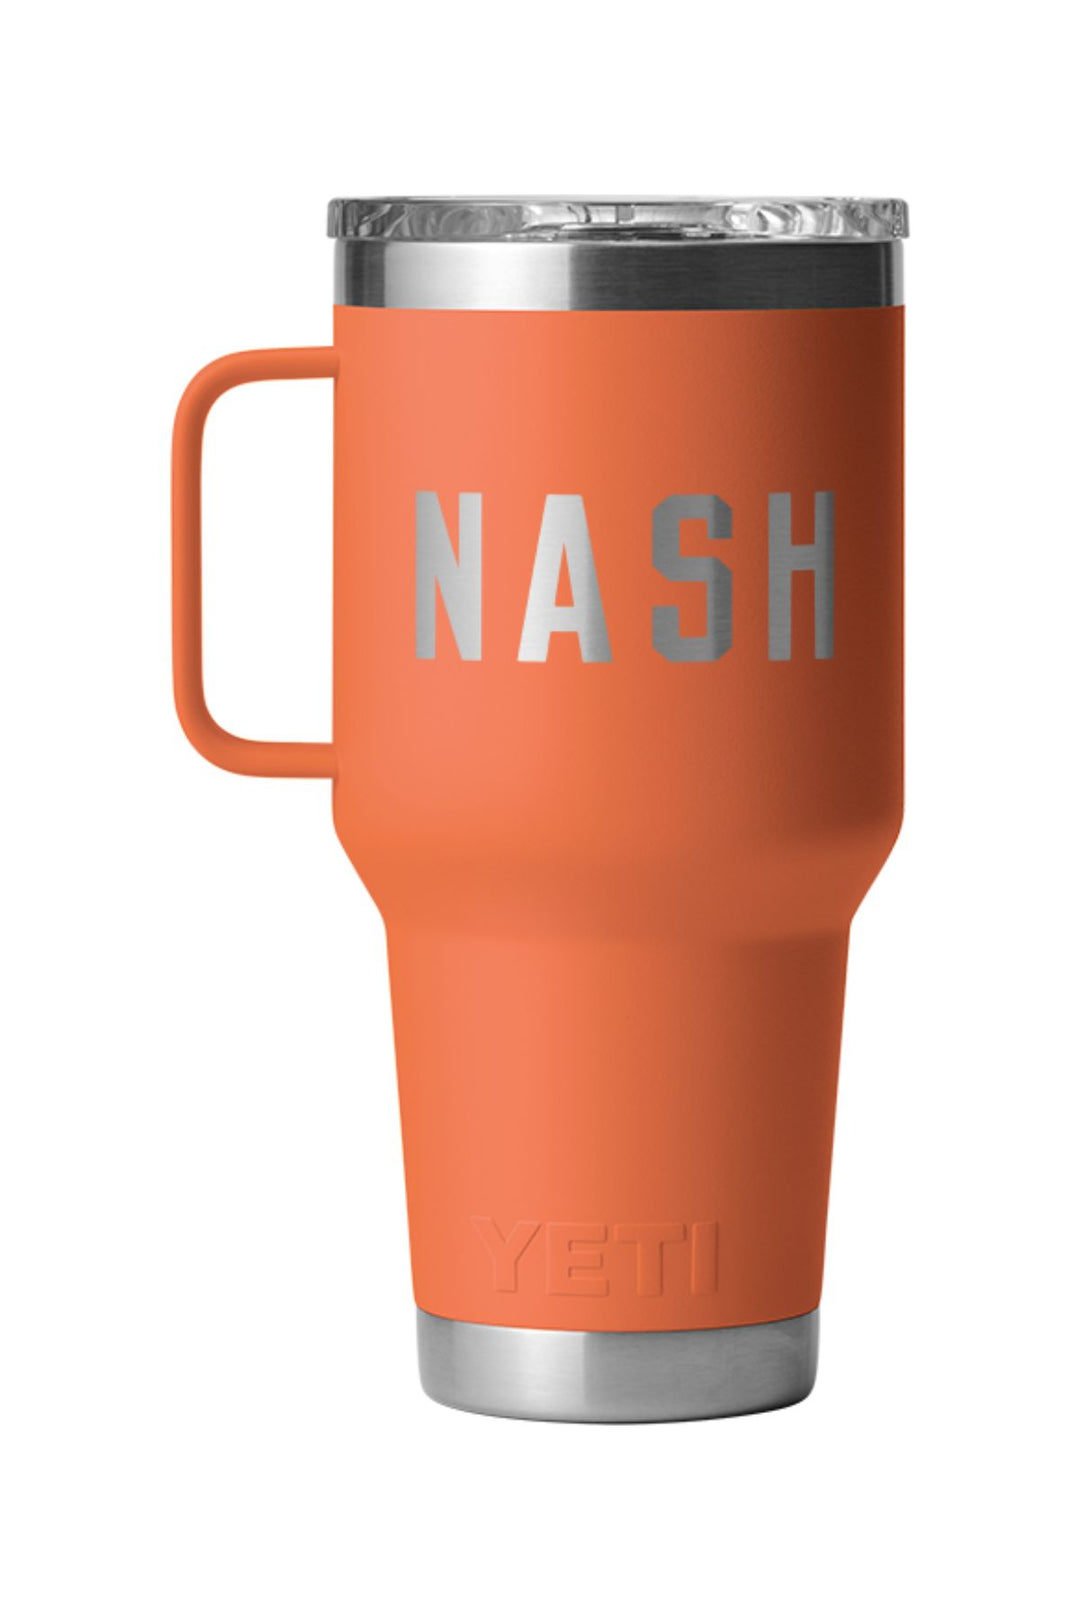 Yeti 20oz Tumbler [Charcoal] – The Nash Collection